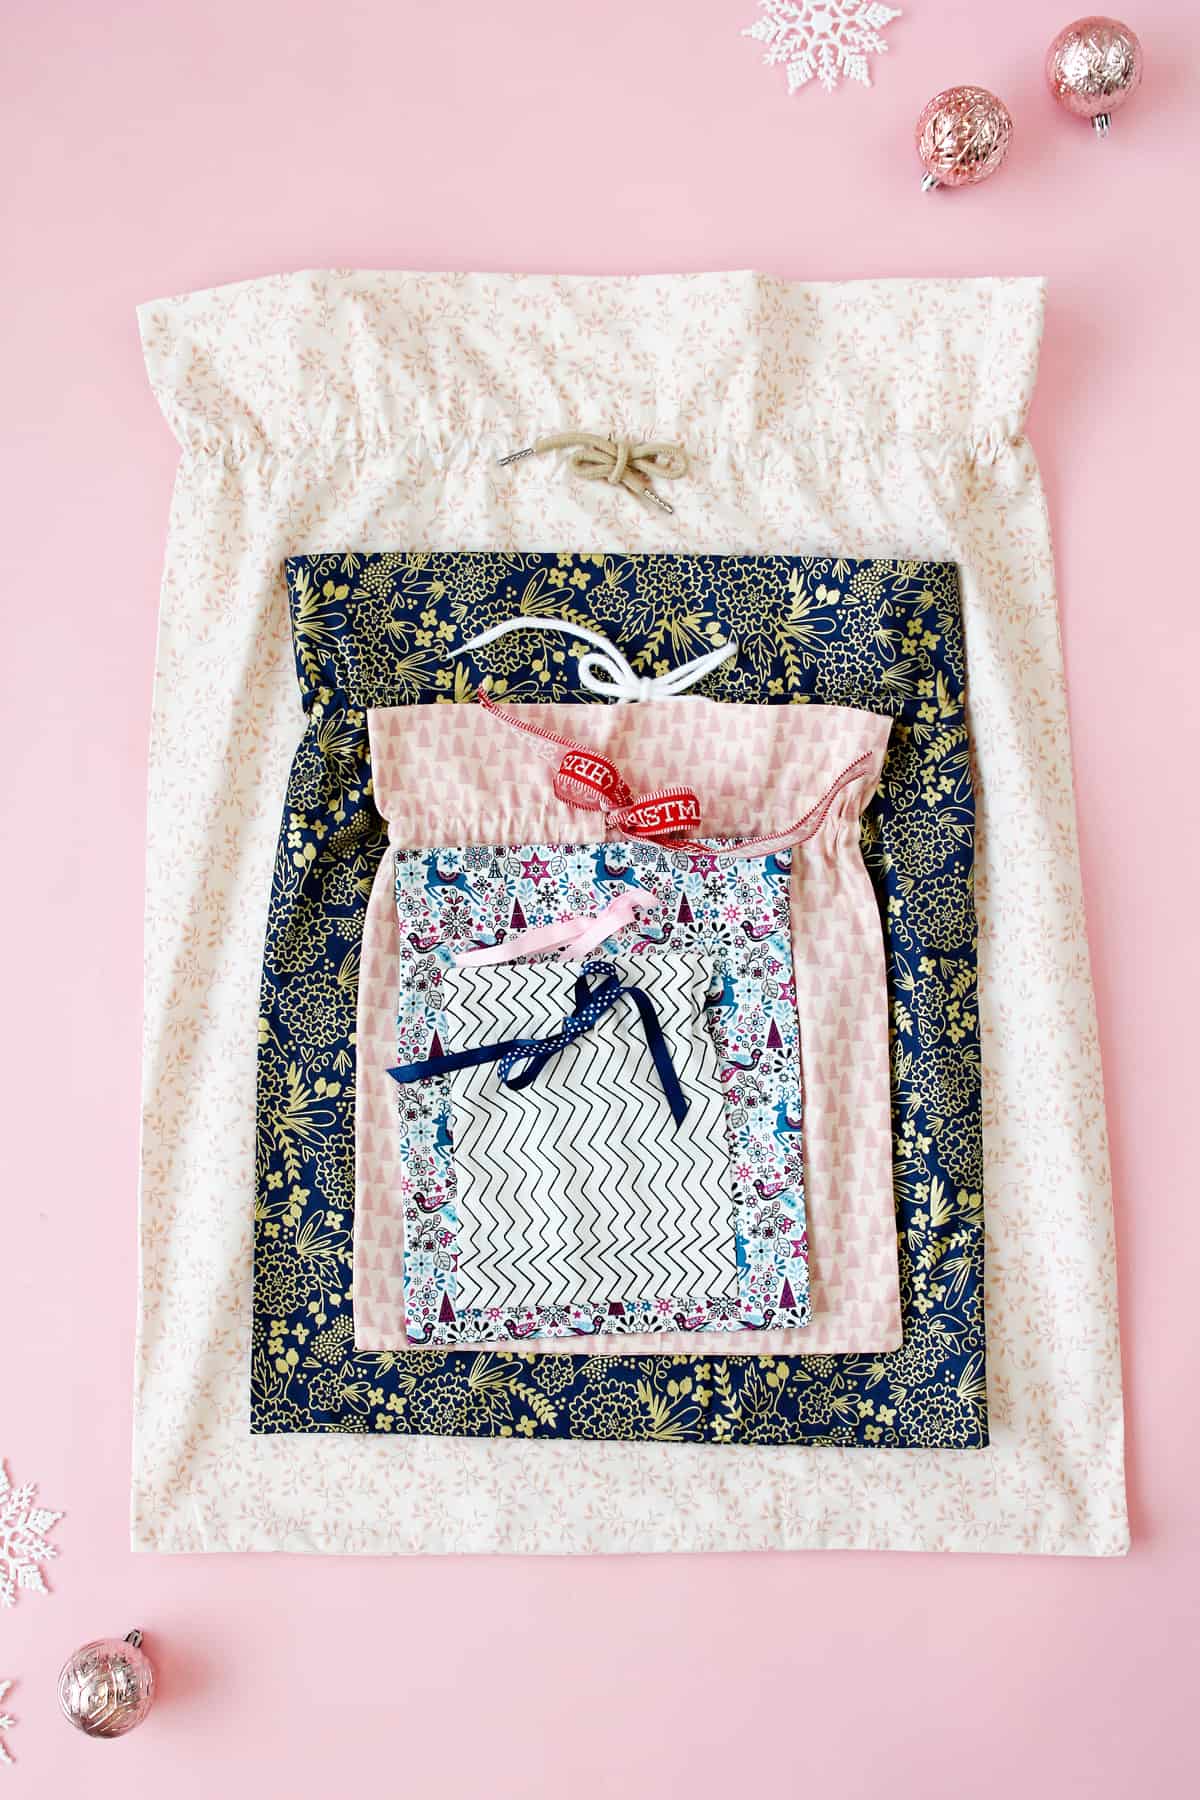 10 FREE tote bag patterns - see kate sew